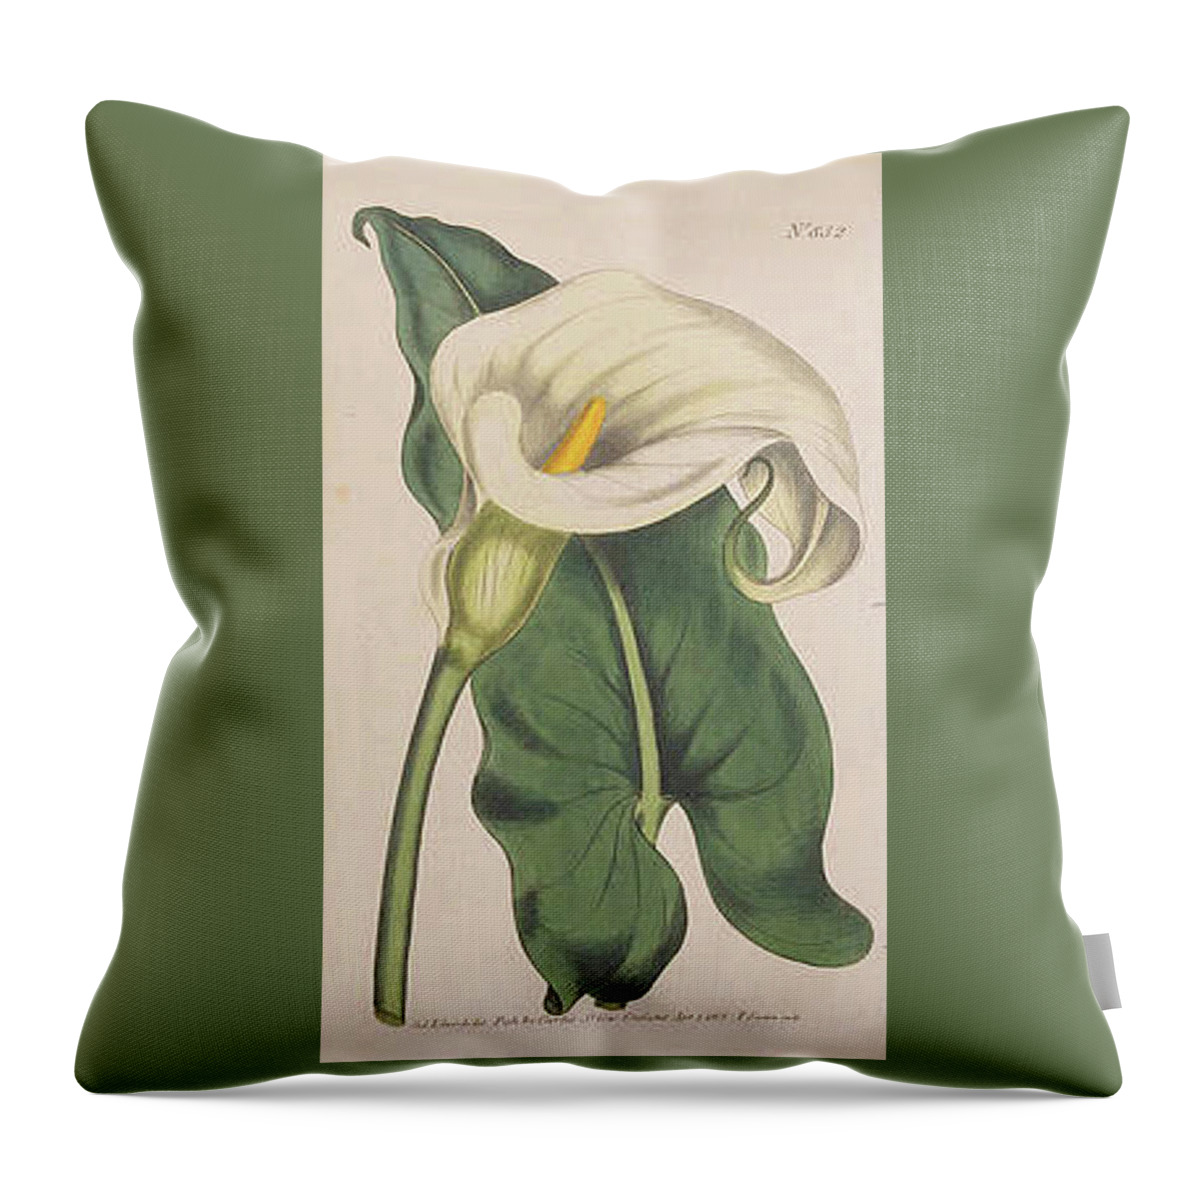 Botanical Prints Throw Pillow featuring the digital art Ethiopian Calla by Kim Kent